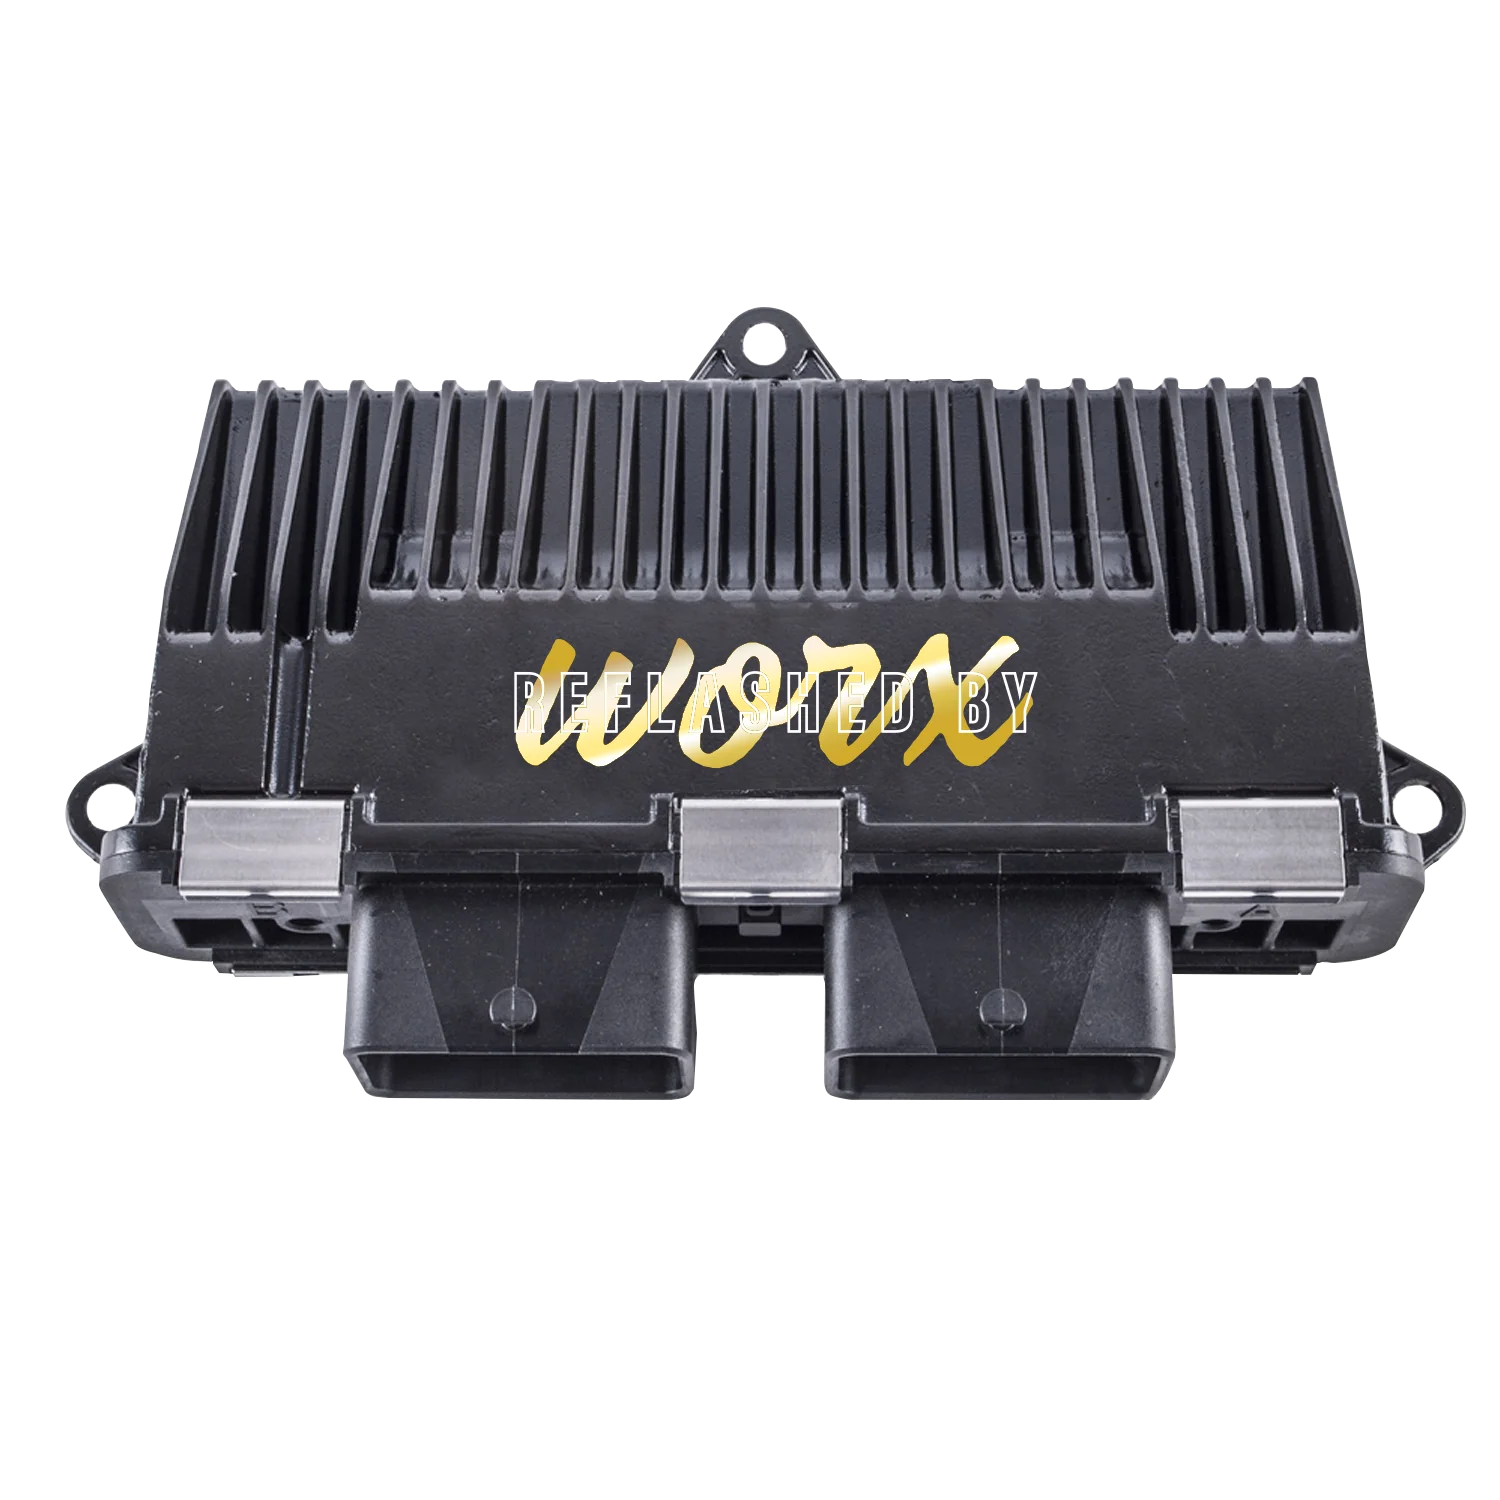 Worx Racing Reflash Seadoo 4-TEC 8400RPM